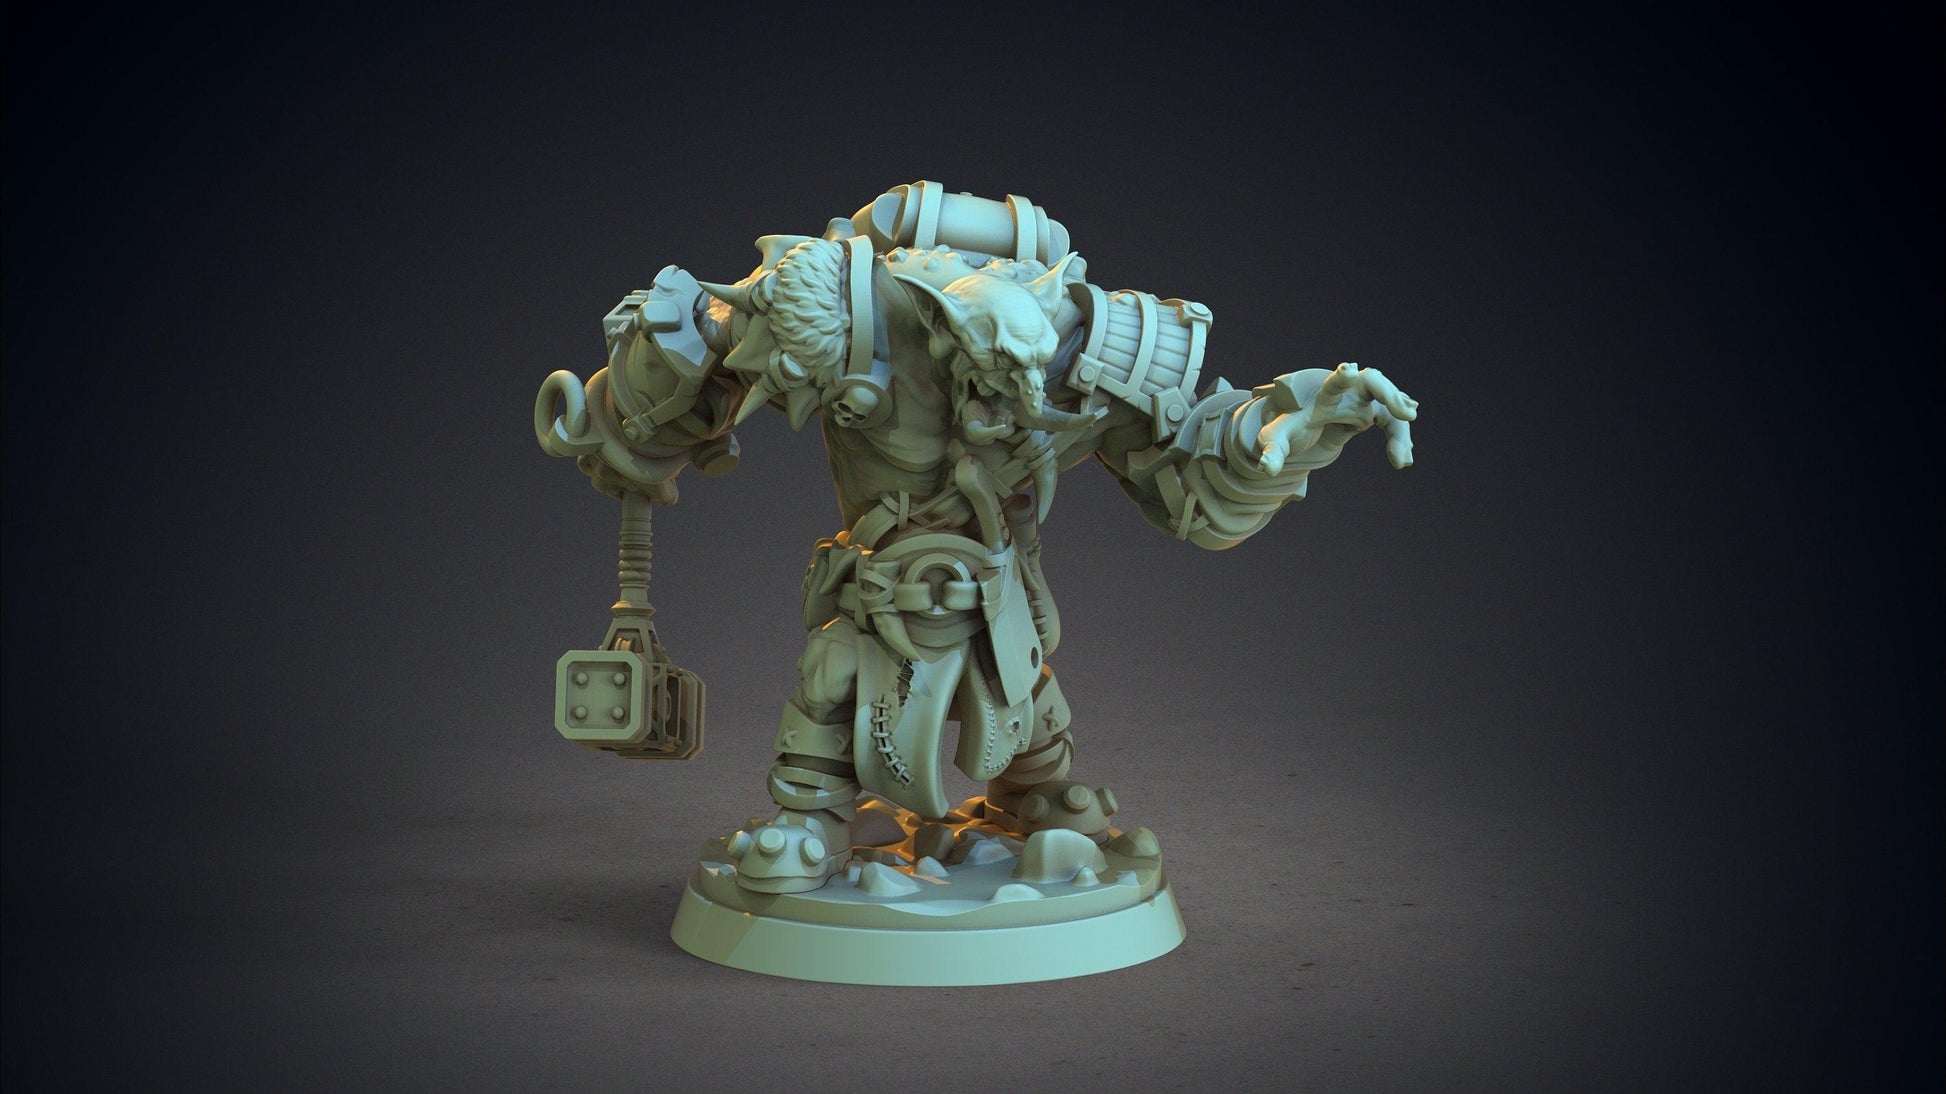 Zervos, the Mighty War Troll Miniature | DnD Trolls for Tabletop RPGs | 32mm Scale - Plague Miniatures shop for DnD Miniatures